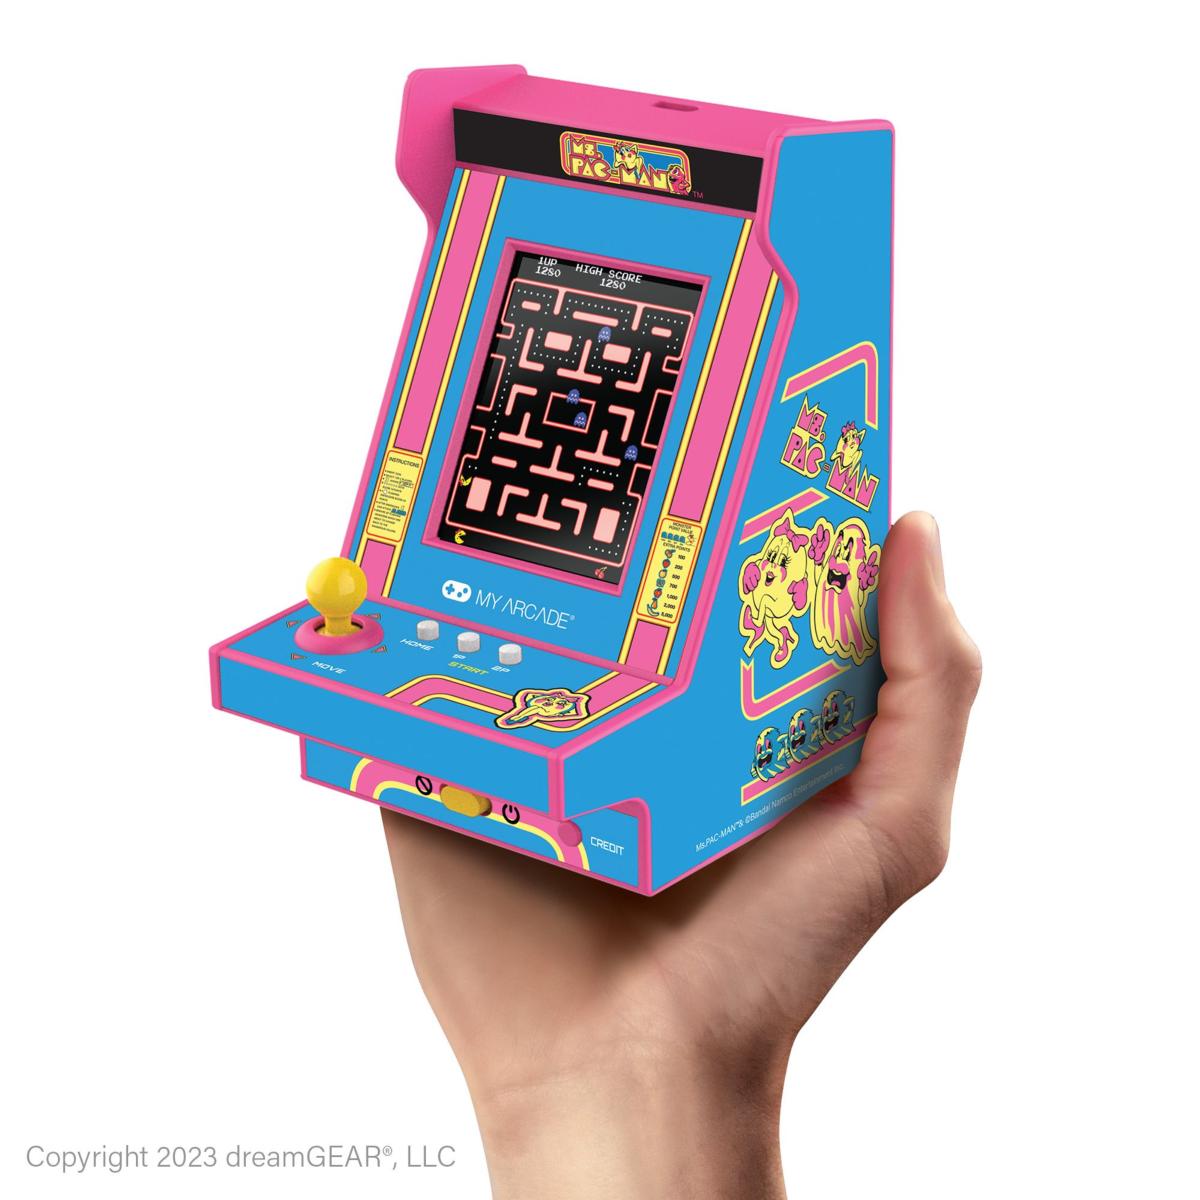 My Arcade - Nano Player PRO Ms. Pac-Man